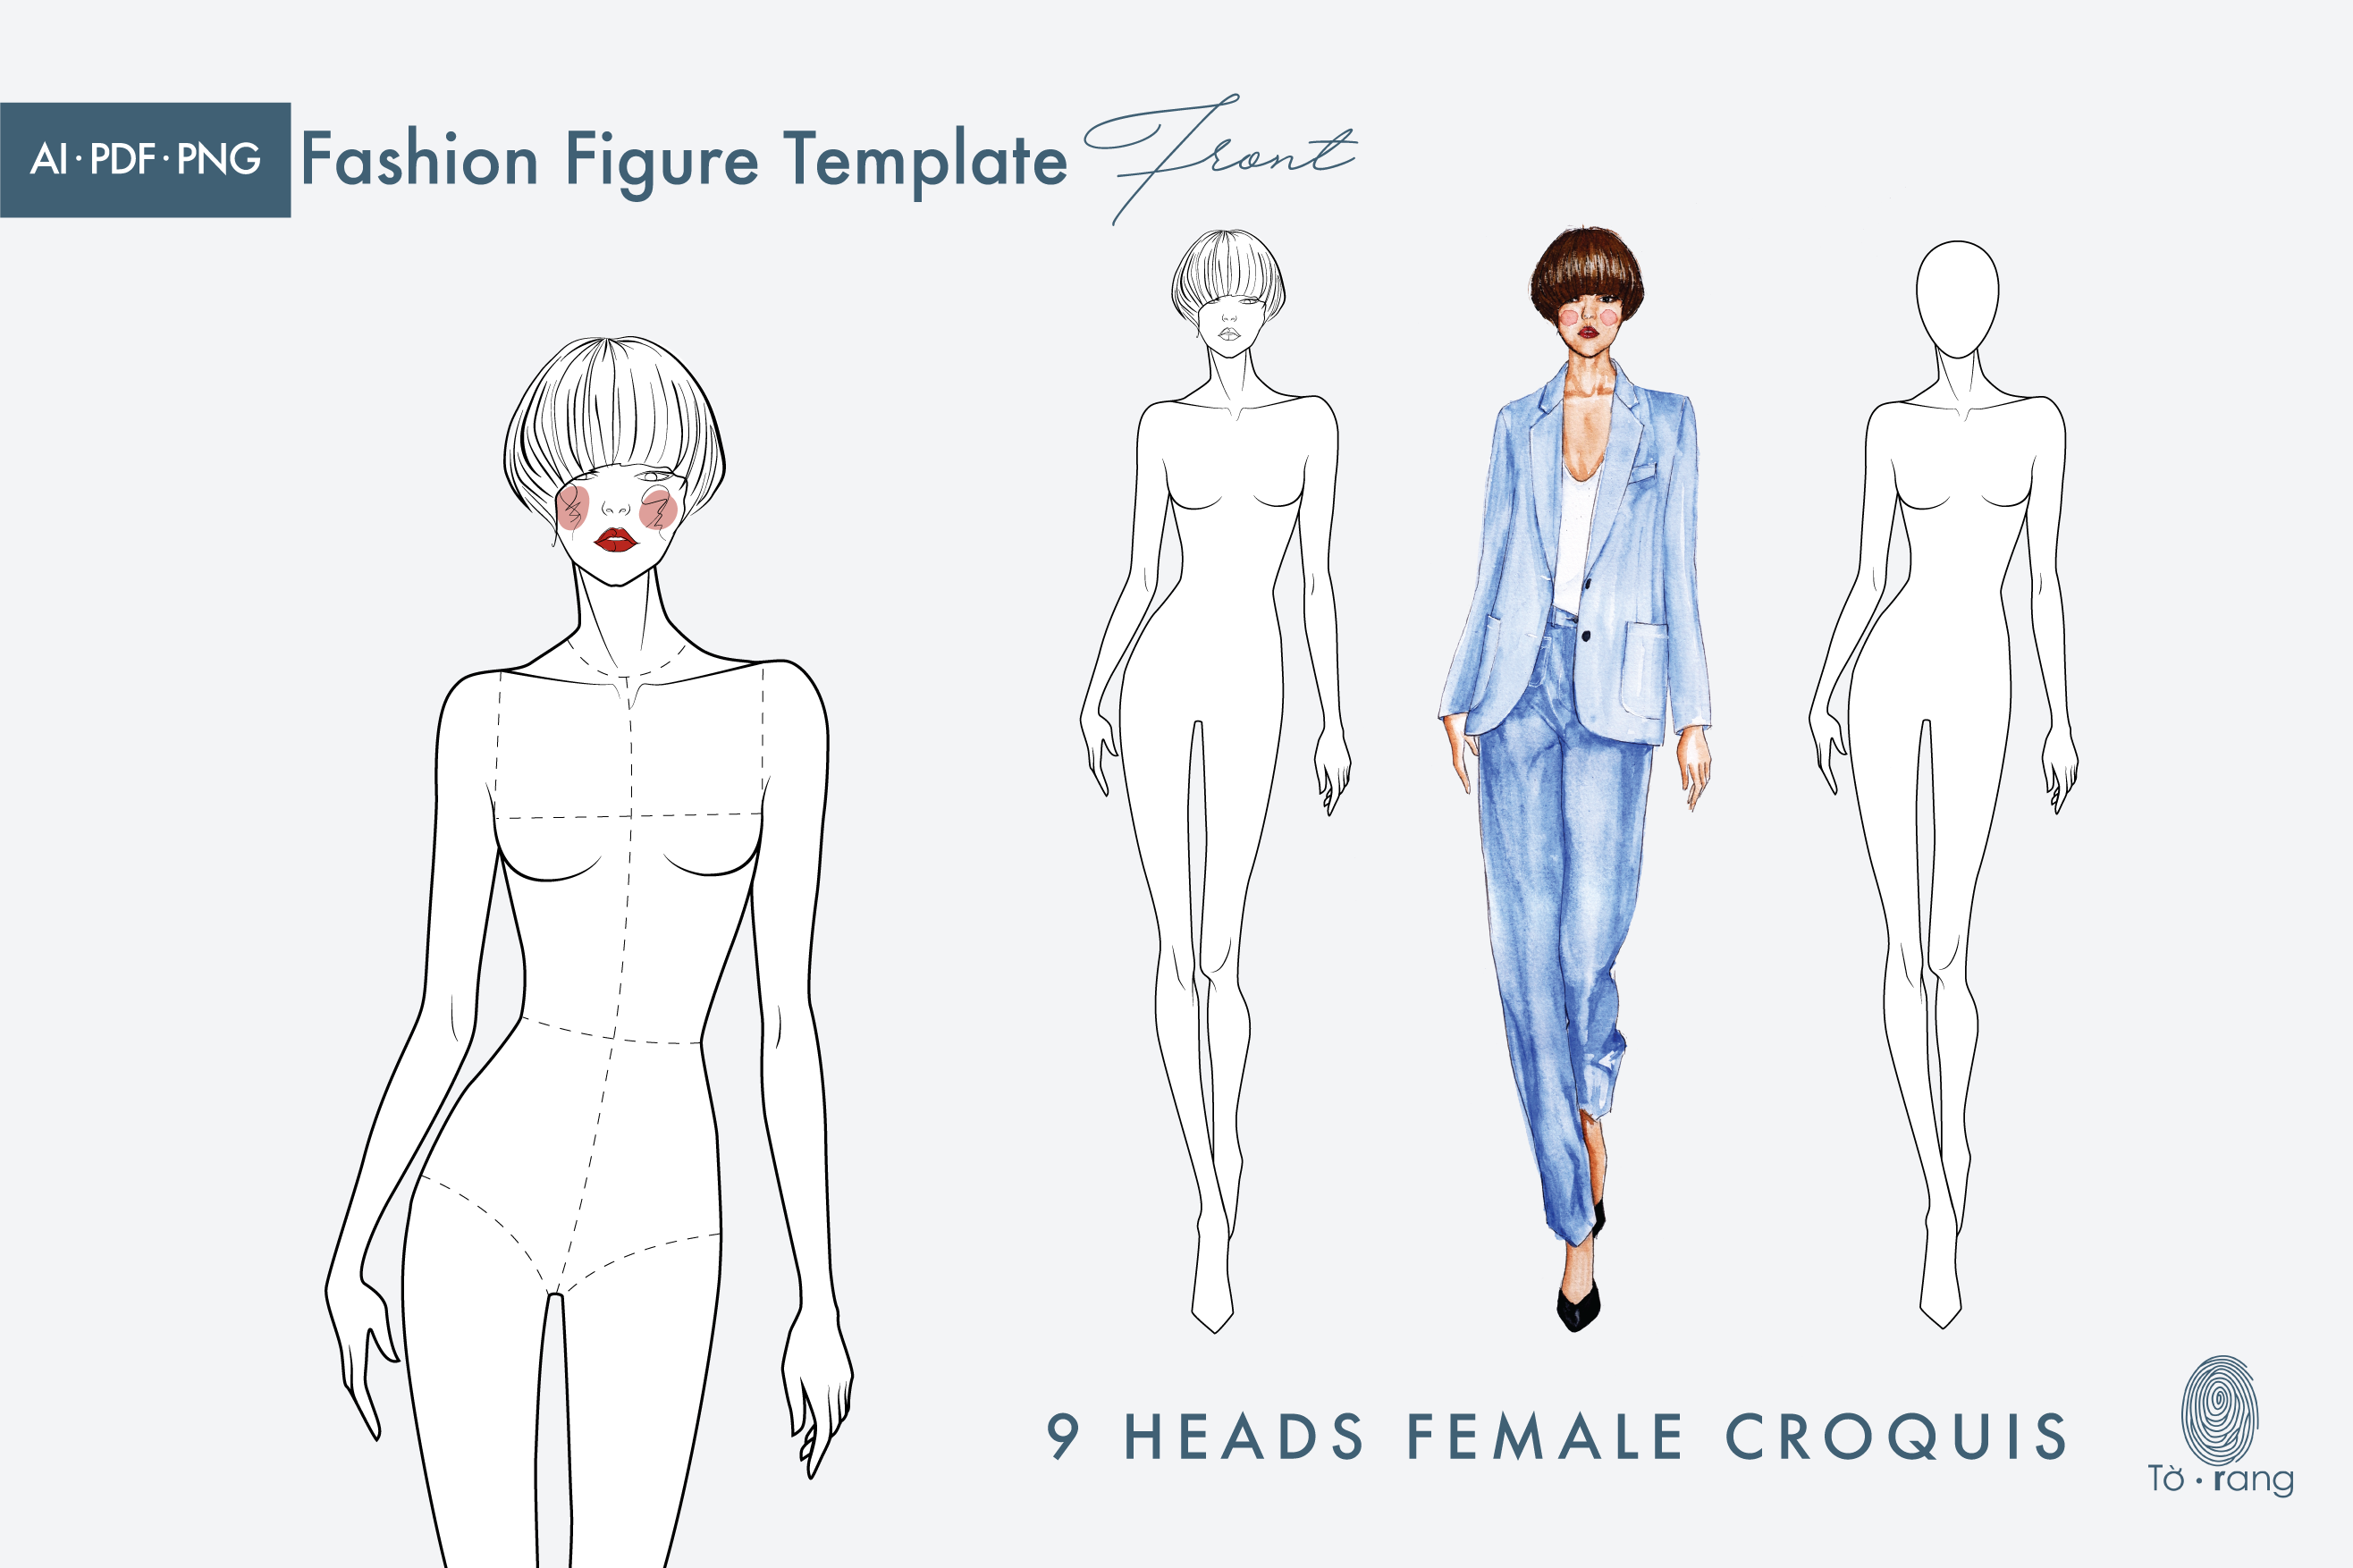 Female Fashion Croquis Template - Etsy | Fashion drawing tutorial, Fashion  figure drawing, Fashion illustrations techniques